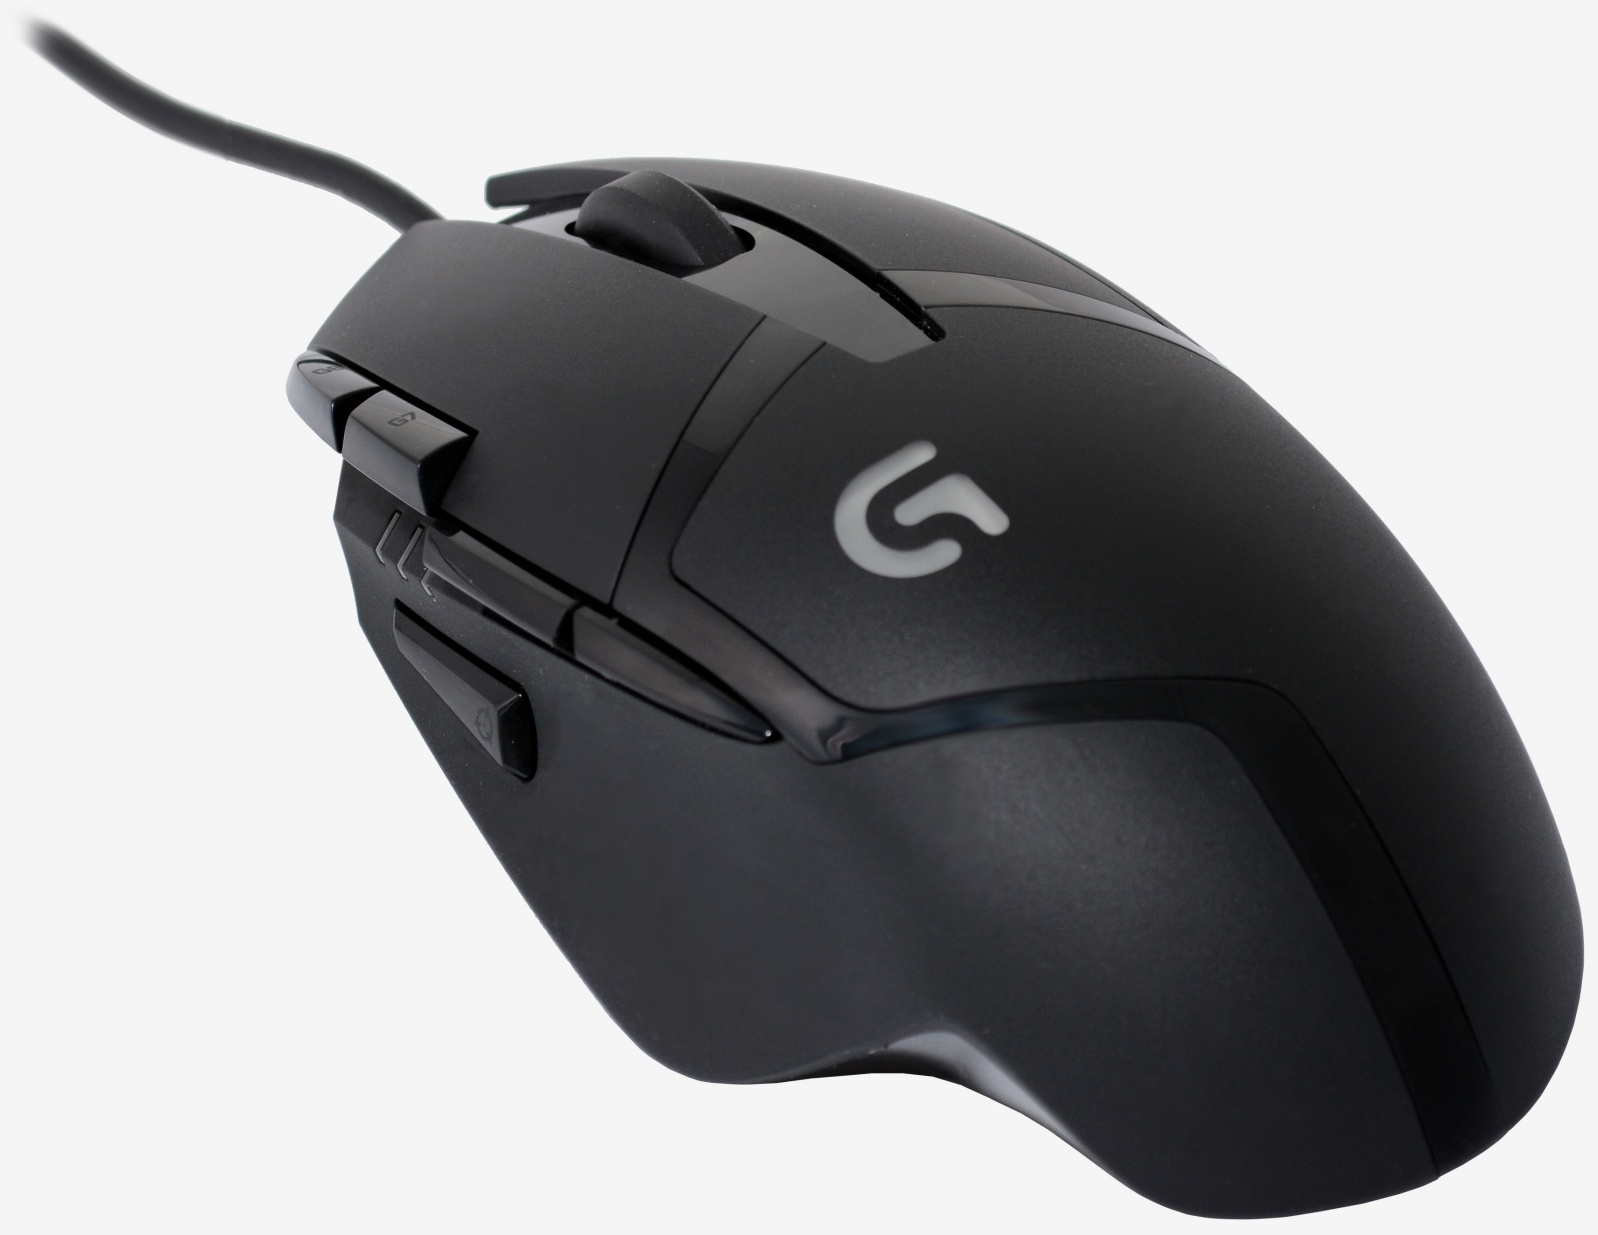 Logitech G402 Hyperion Fury Mouse Review | TechSpot